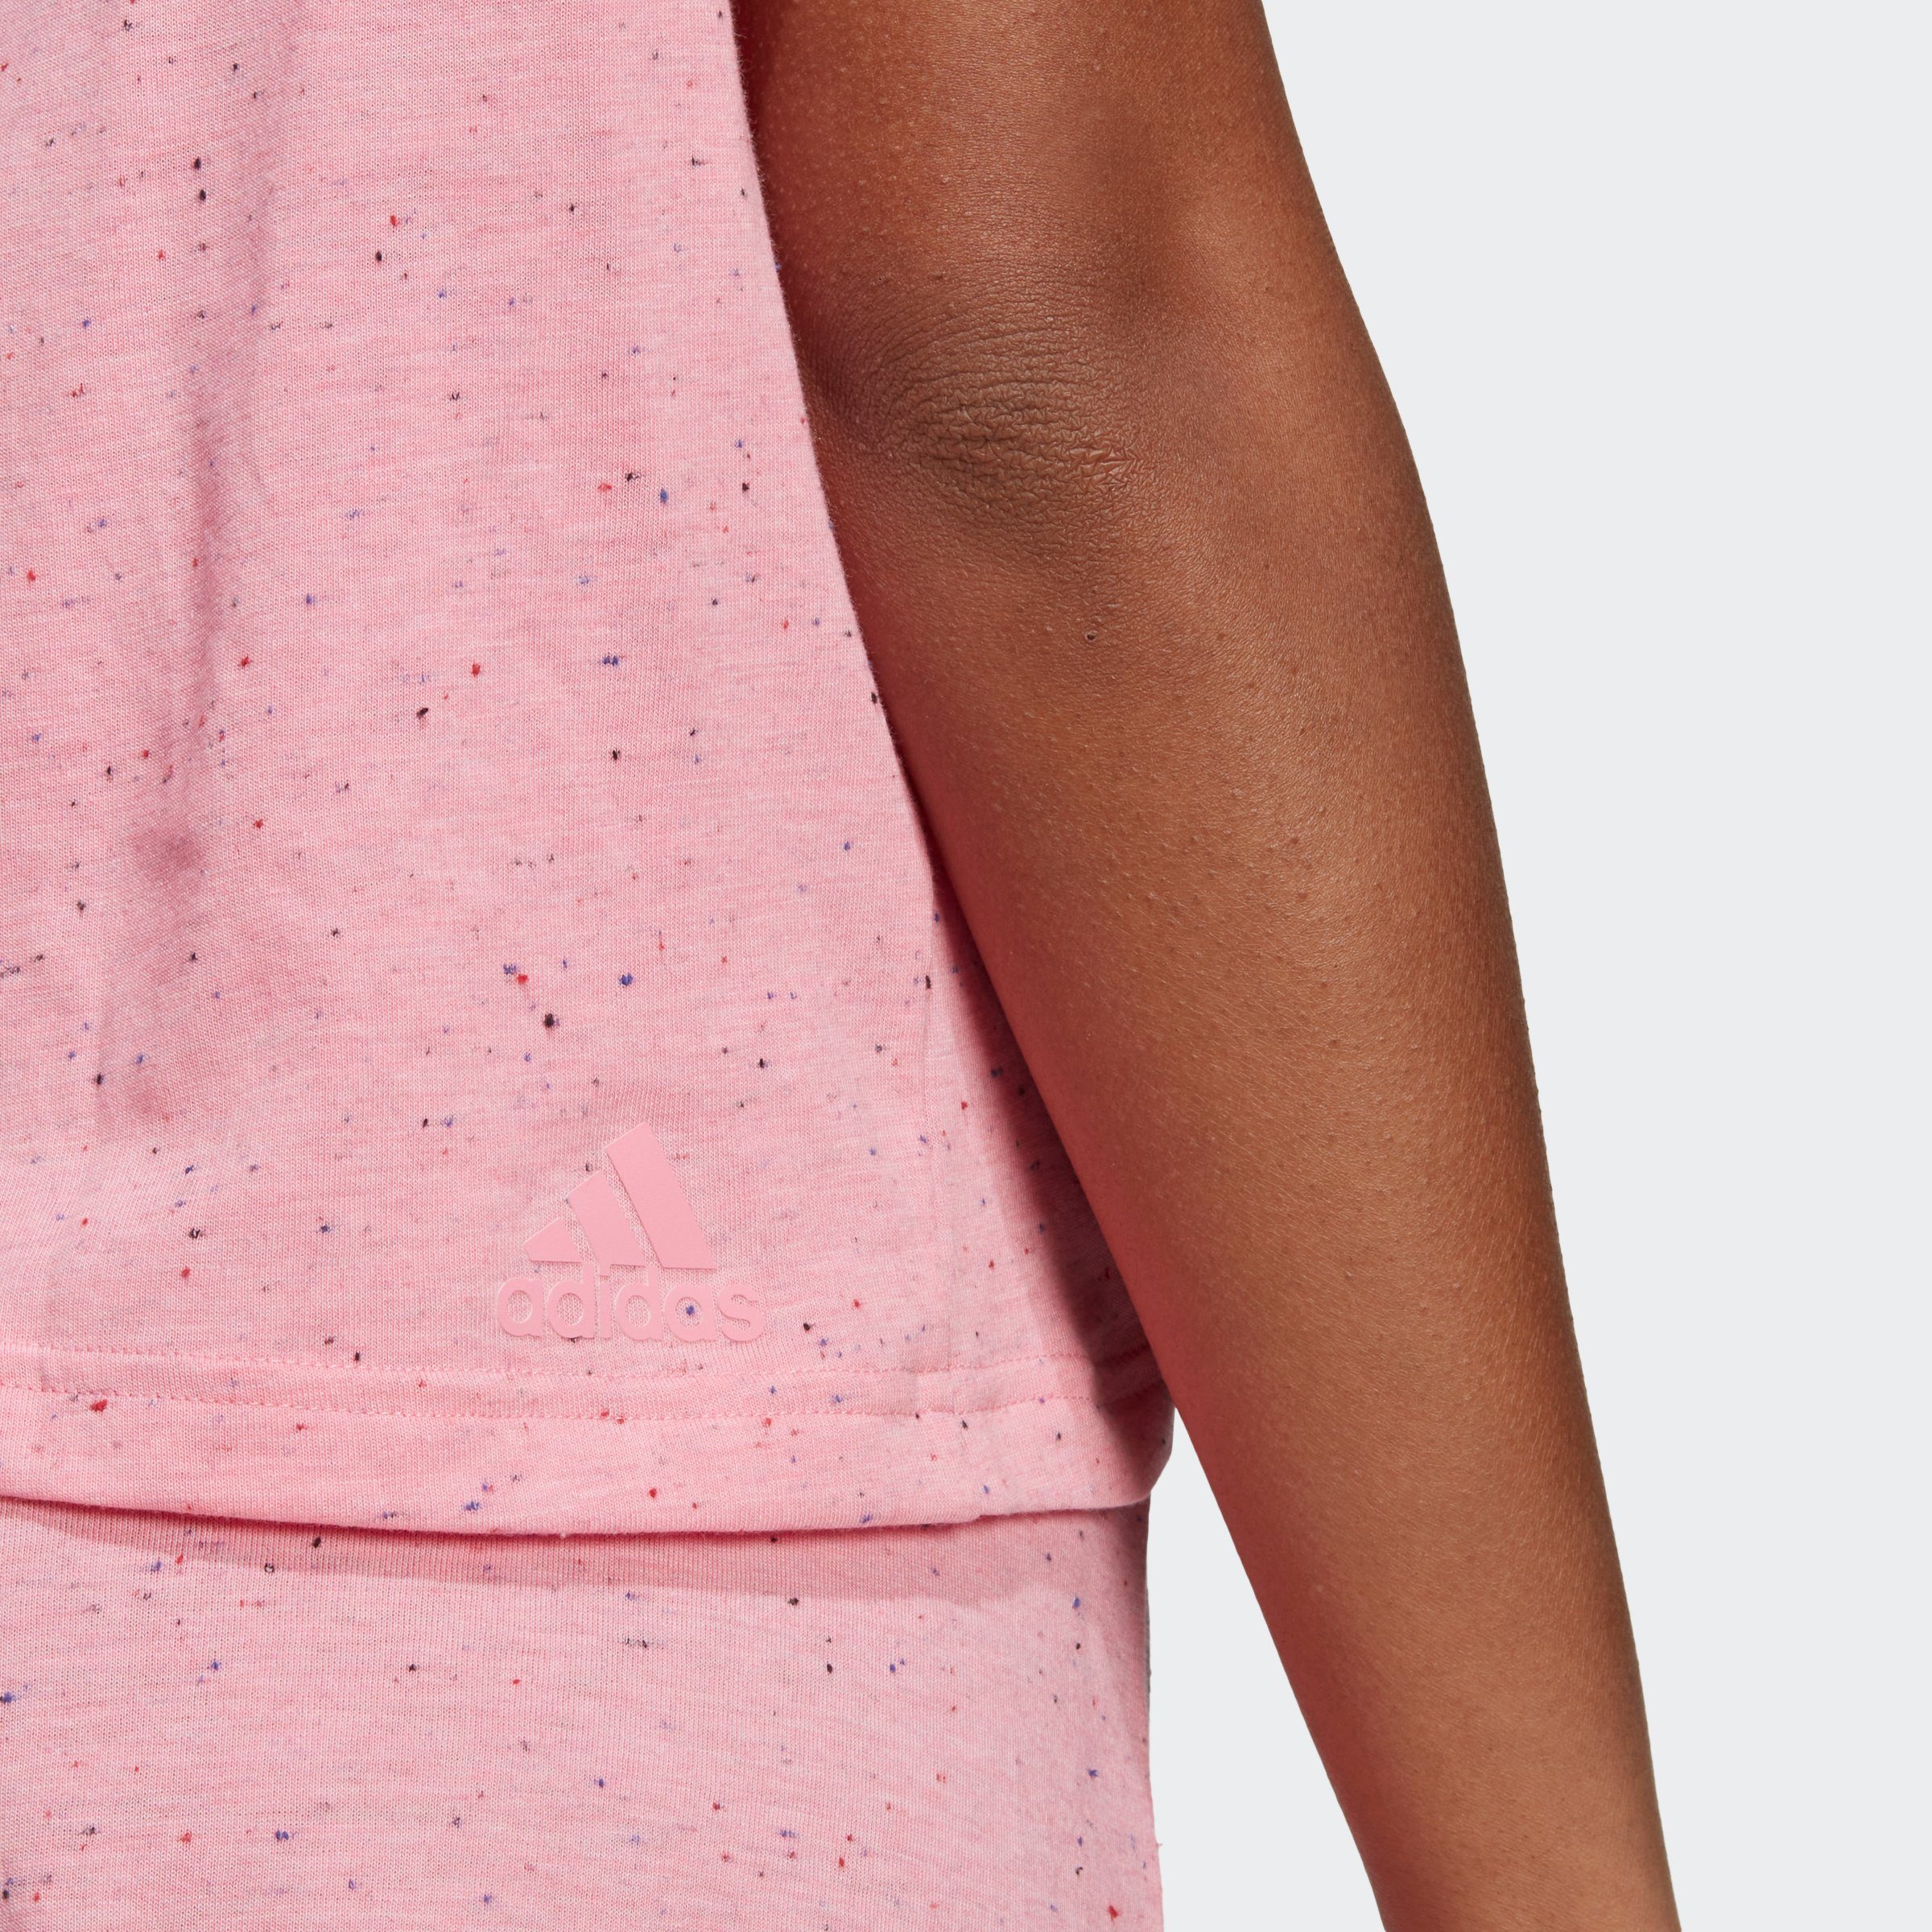 Mel. ICONS Bliss Sportswear adidas FUTURE / White T-Shirt WINNERS Pink